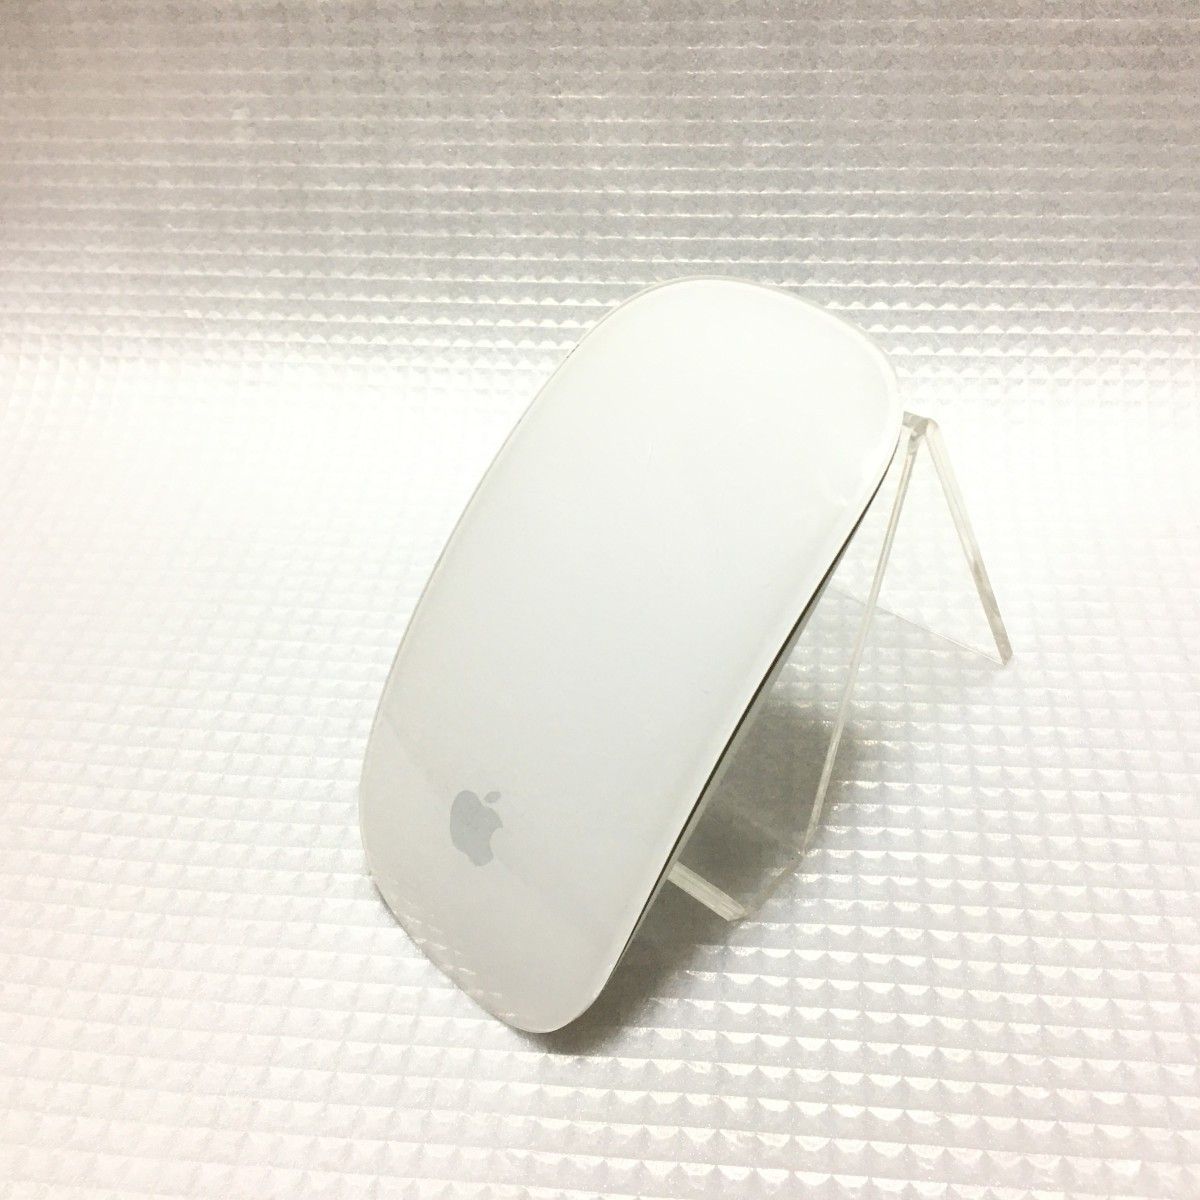 ■ Apple 純正品 bluetooth ワイヤレスマウス Magic Mouse A1296 動作確認済 MB829J/A